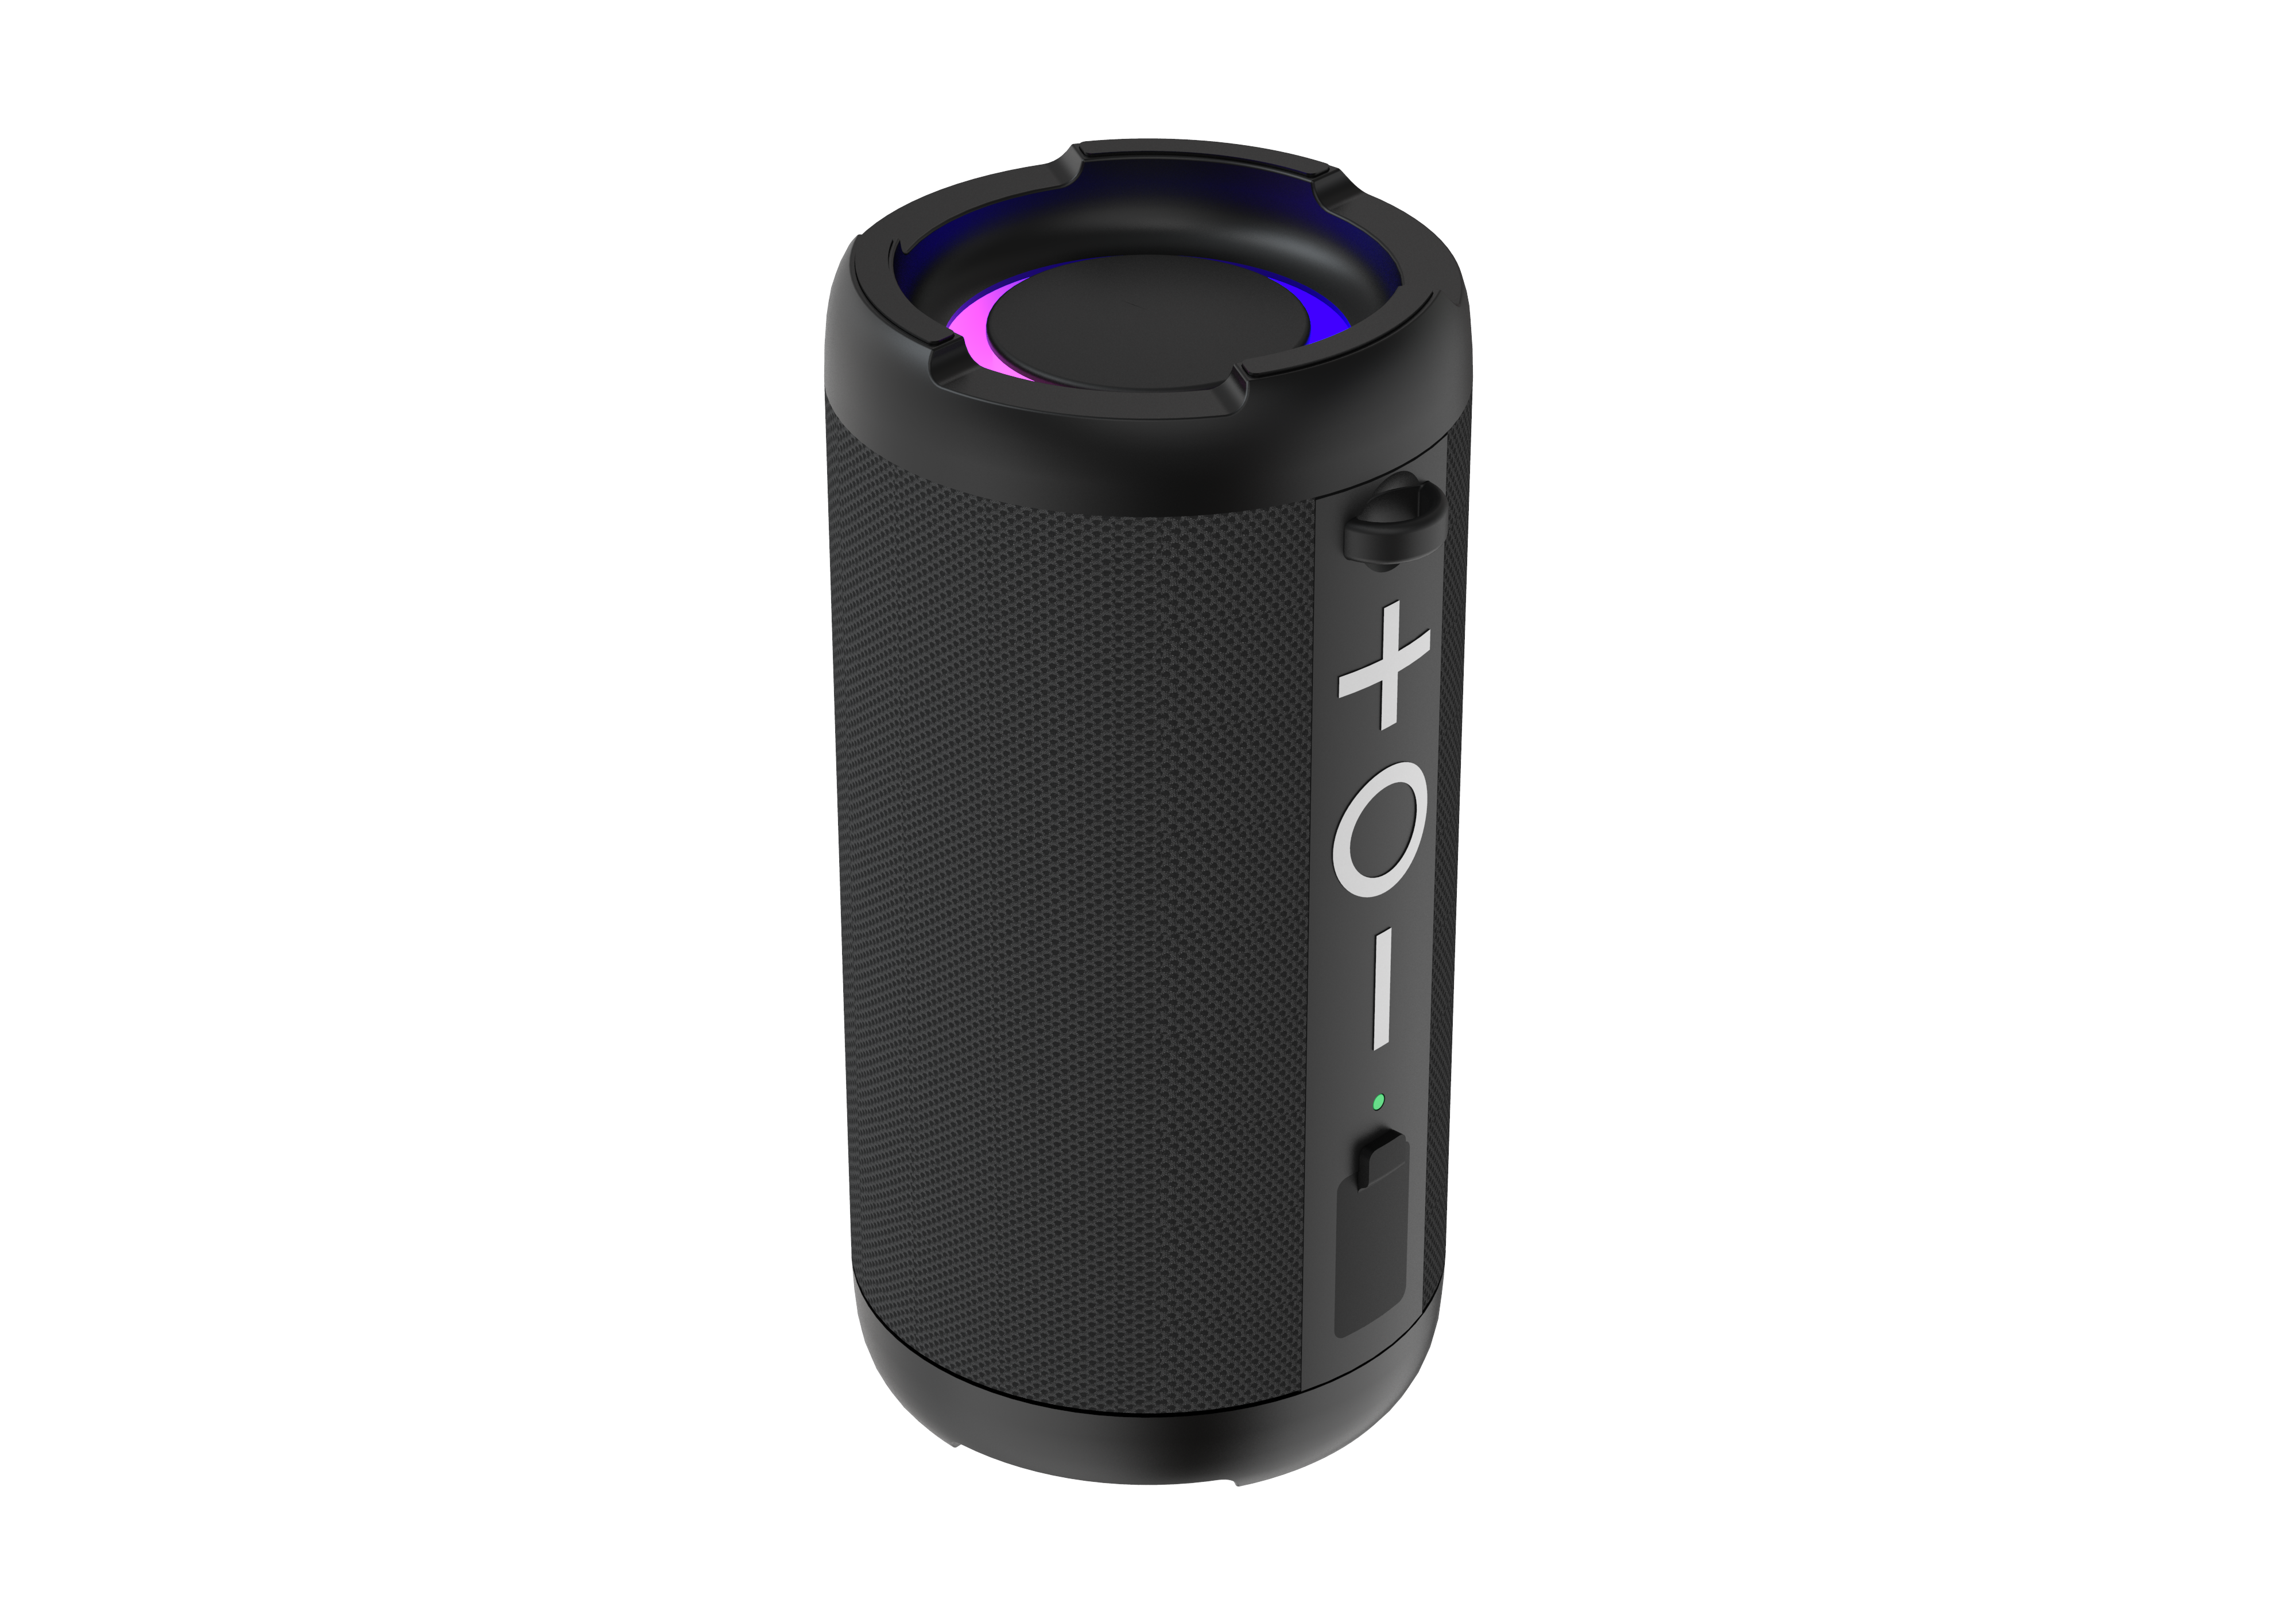 Latest Outdoor Speaker Waterproof IPX7 Mini Bluetooths Speaker Portable